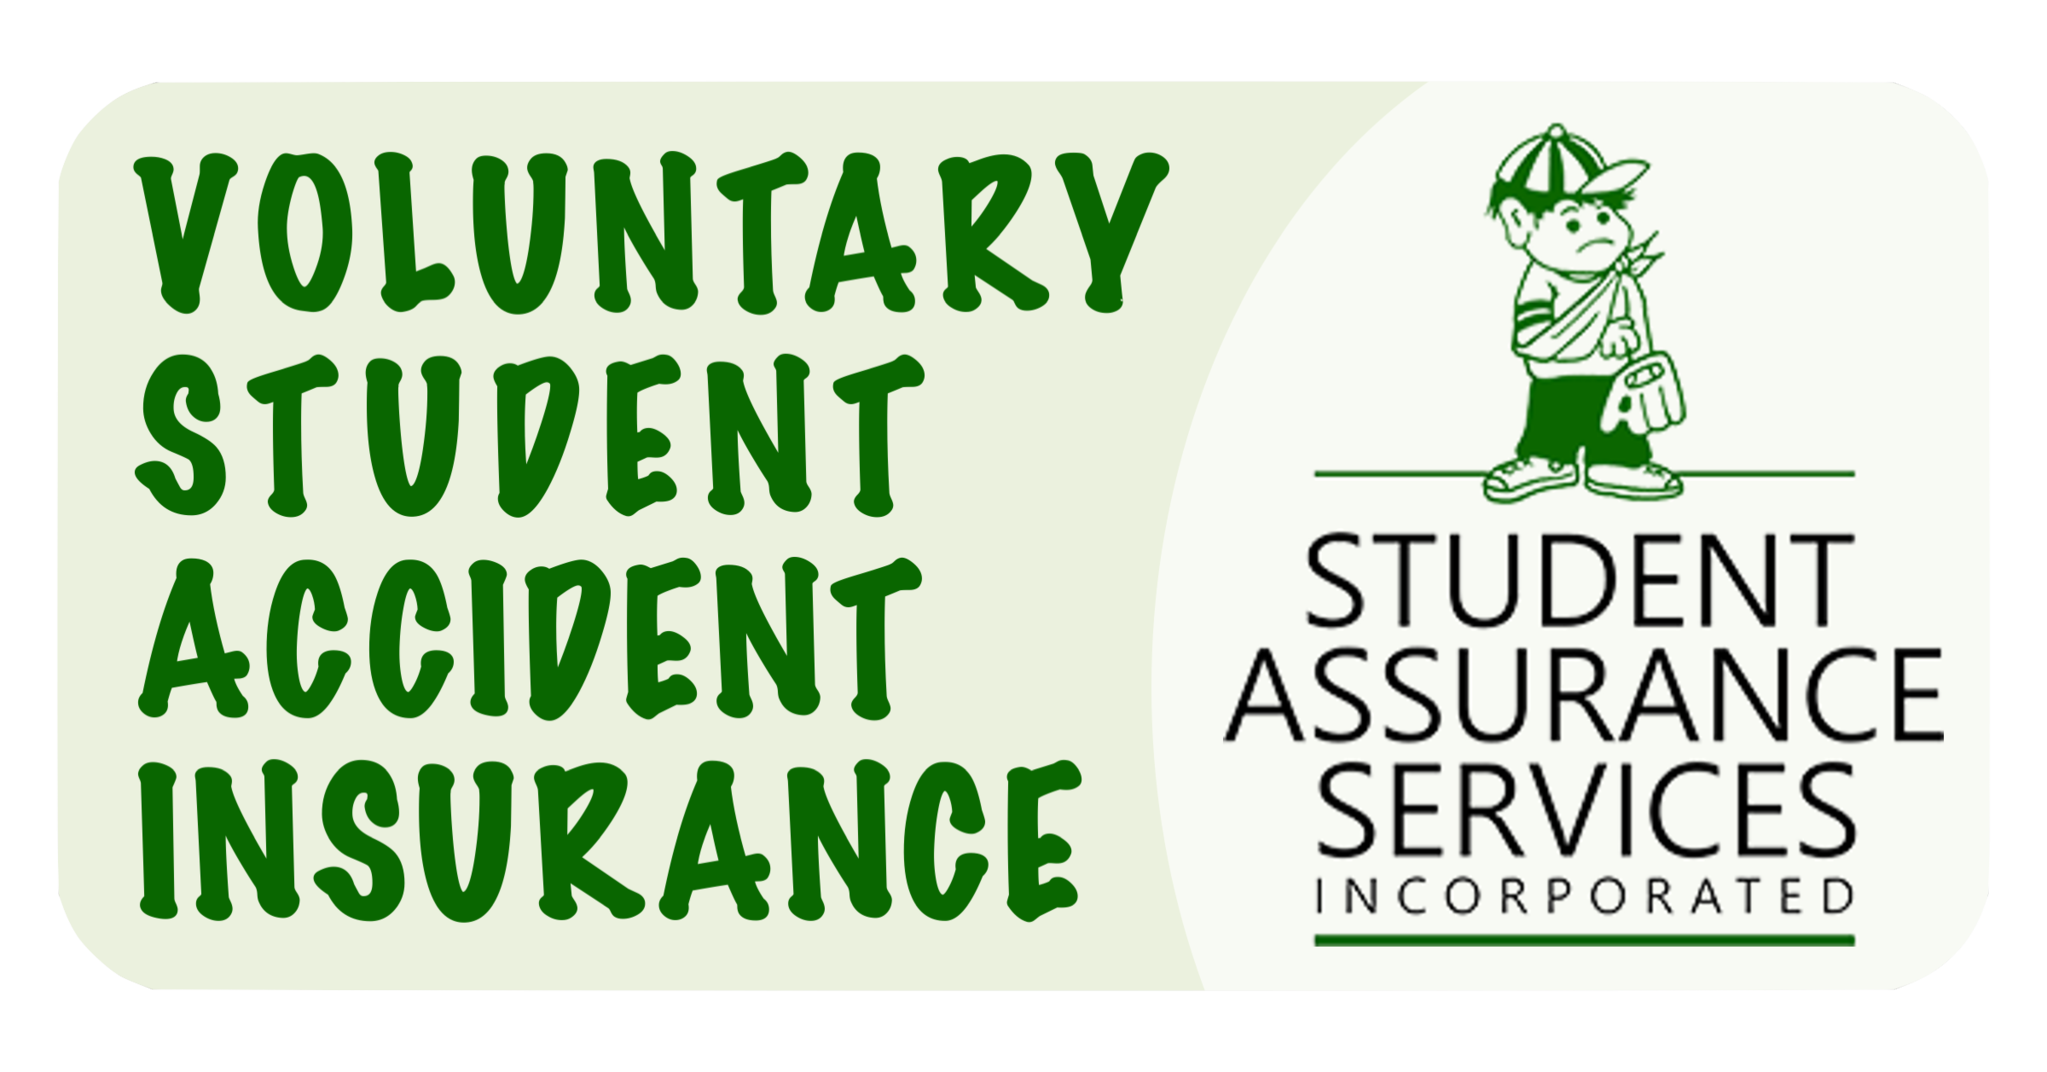 Student Assurance Services